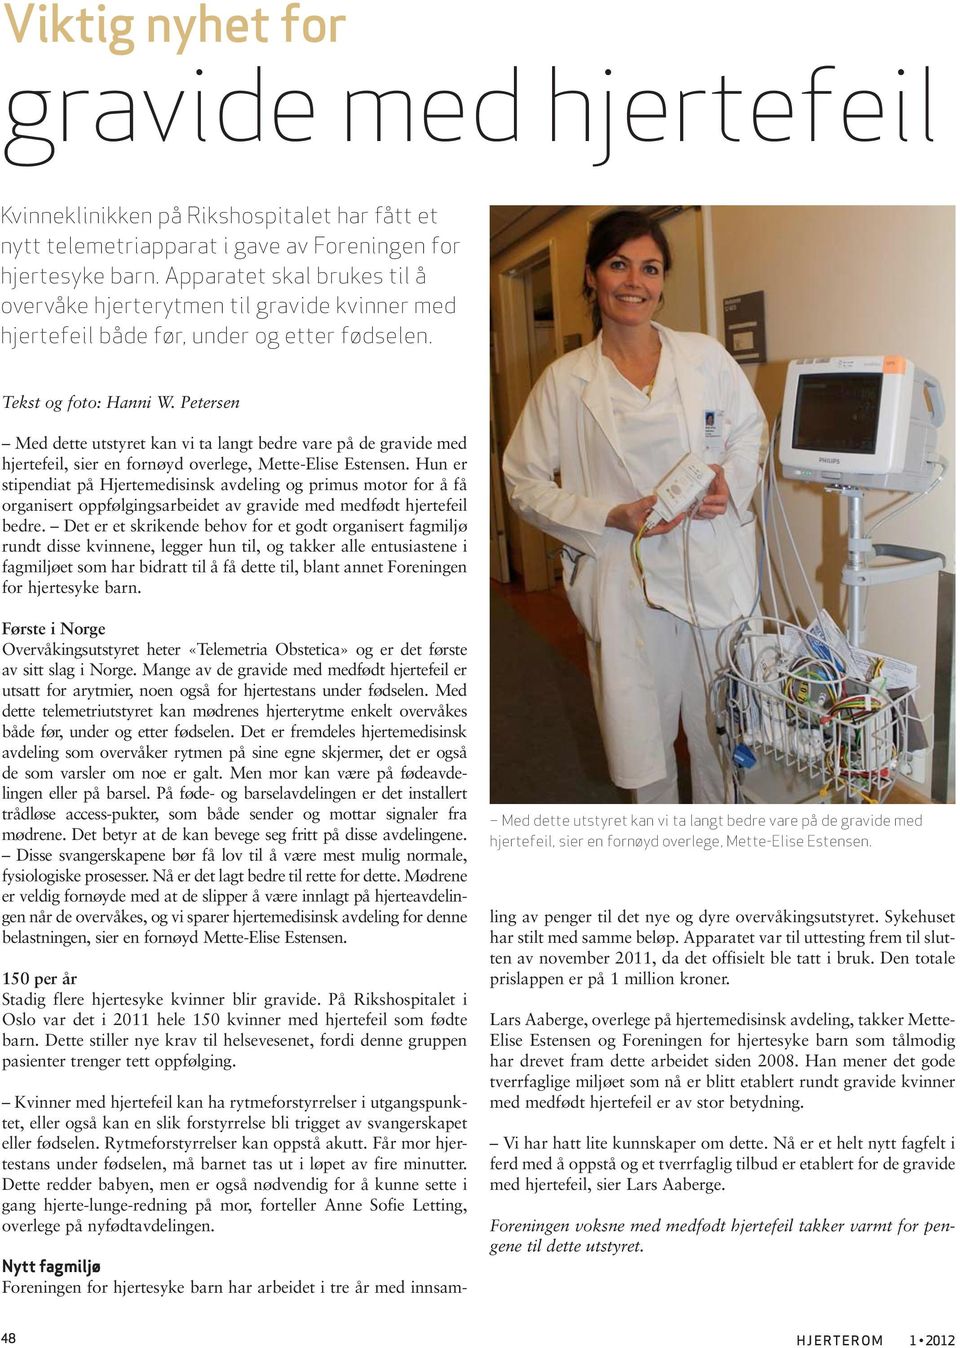 Petersen Med dette utstyret kan vi ta langt bedre vare på de gravide med hjertefeil, sier en fornøyd overlege, Mette-Elise Estensen.